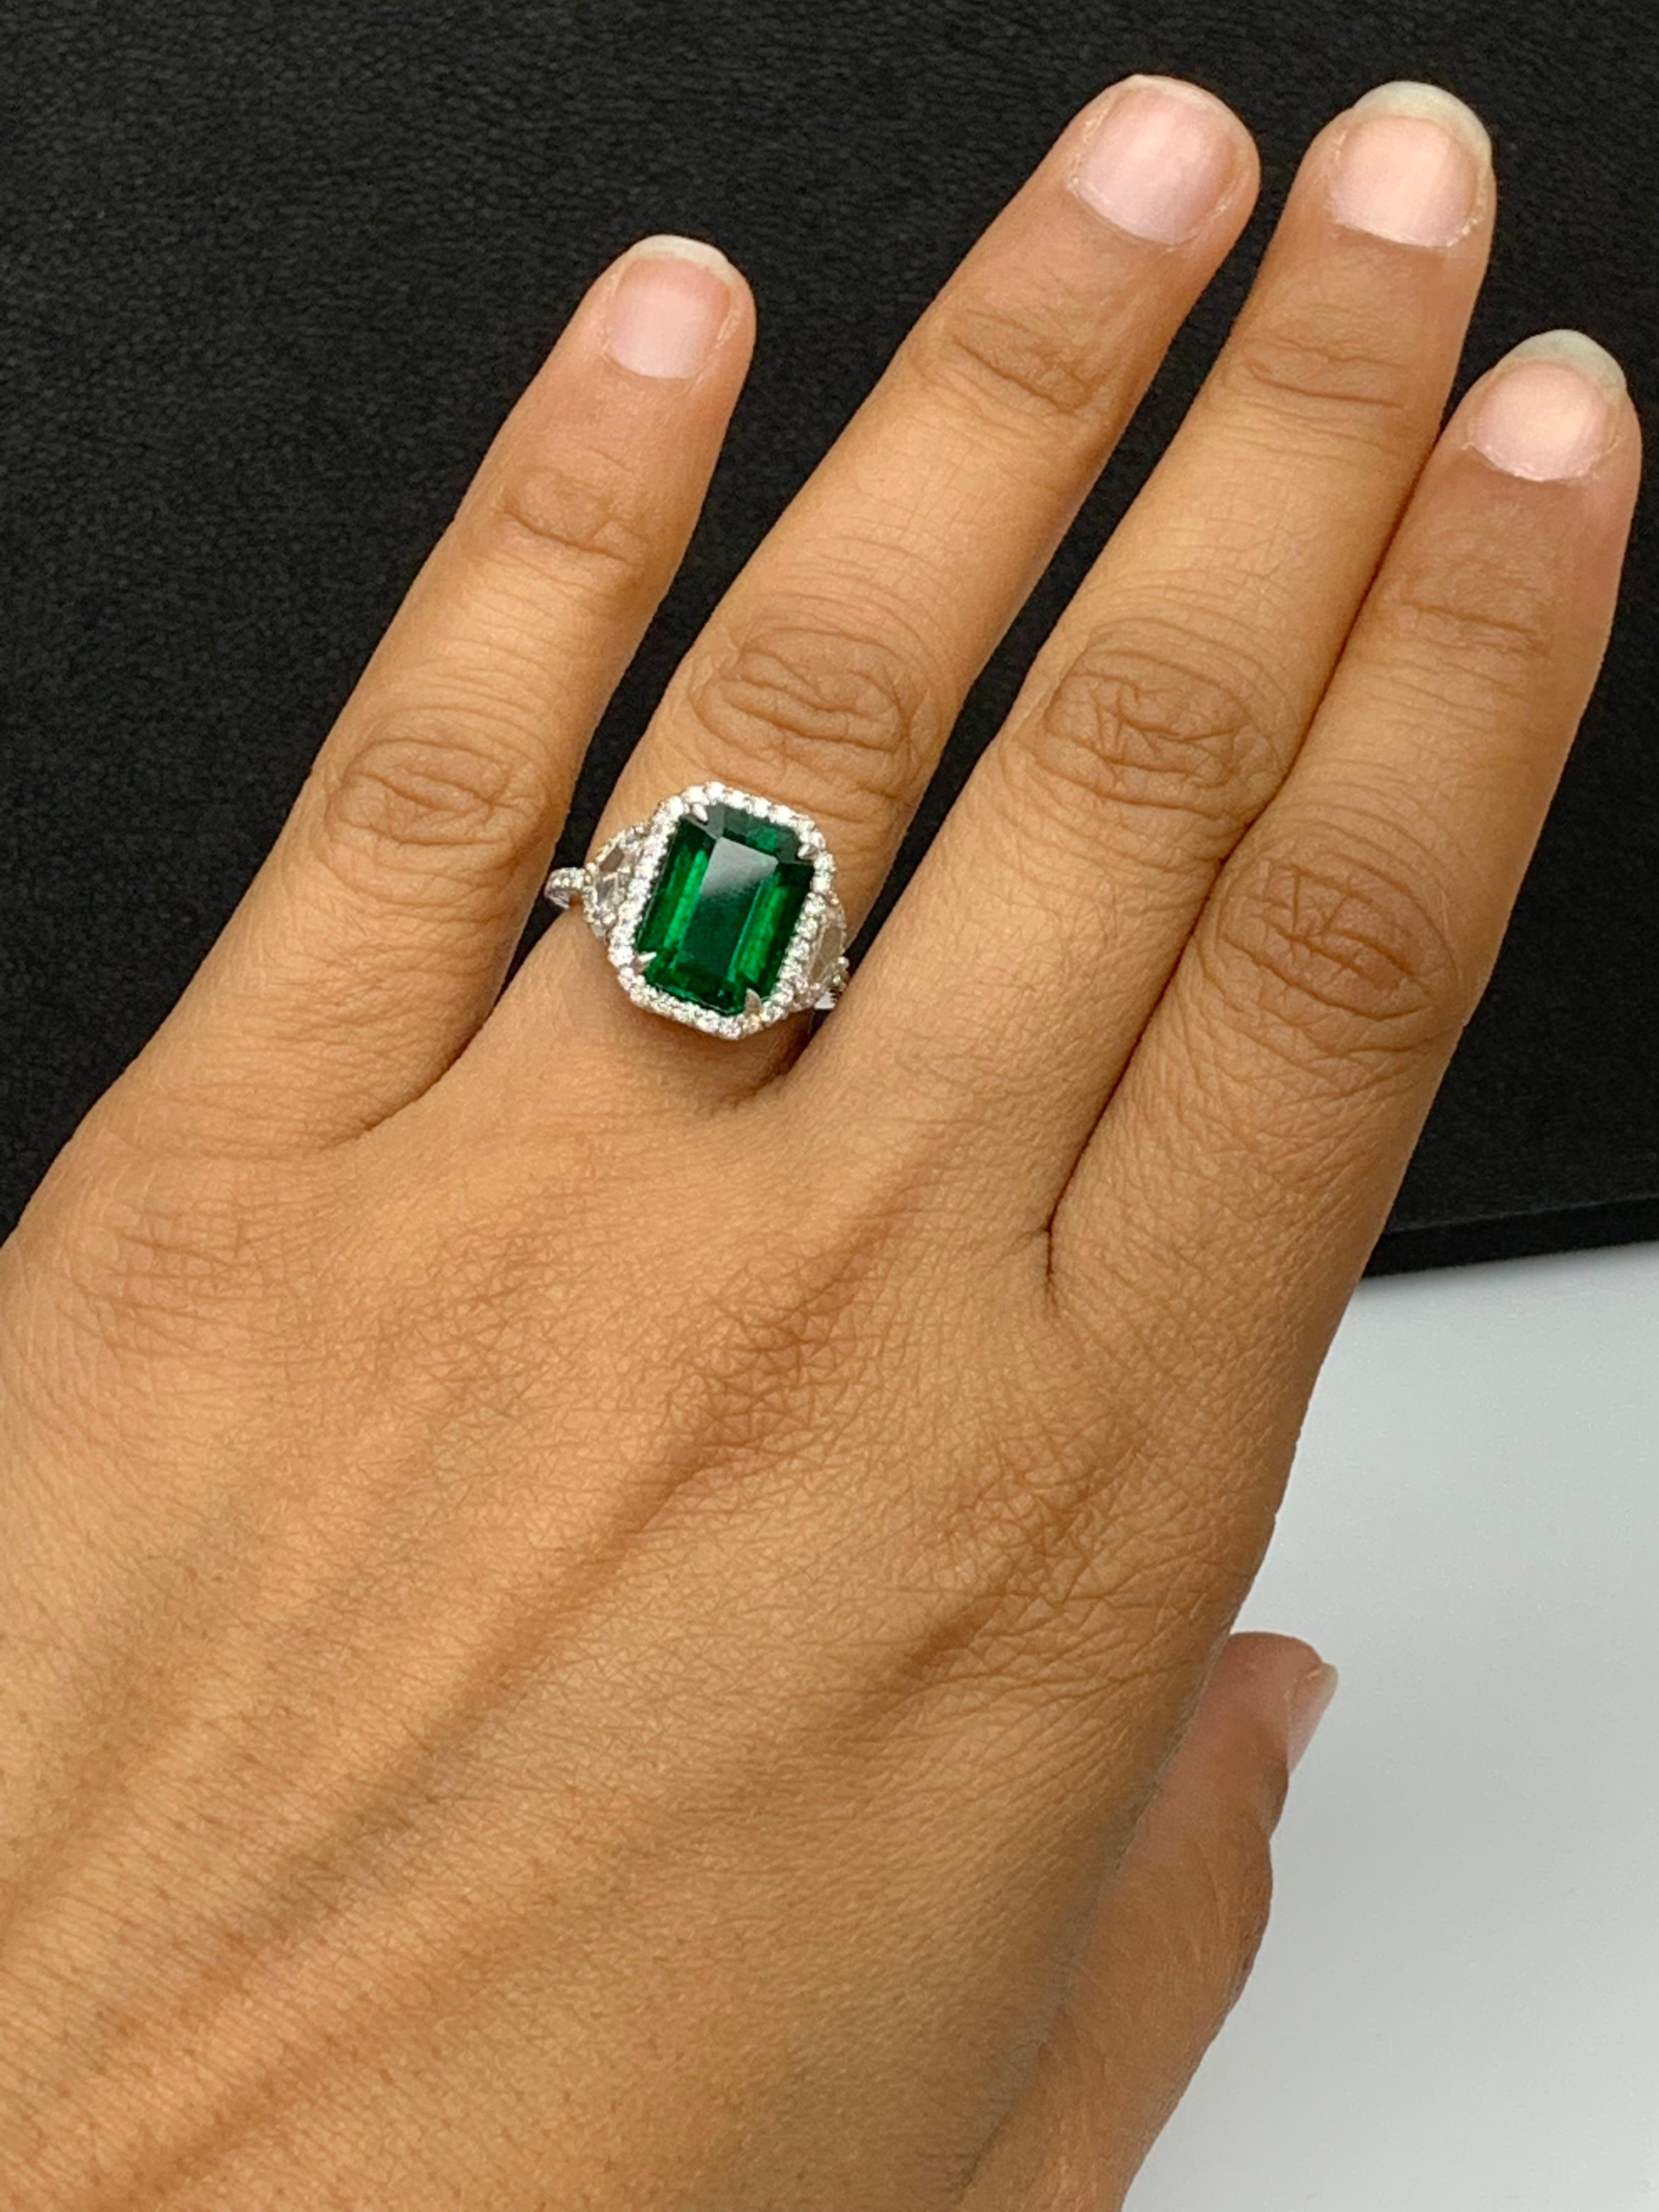 GIA Certified 4.07 Carat Emerald Cut Emerald Diamond 3 Stone Ring in Platinum For Sale 10